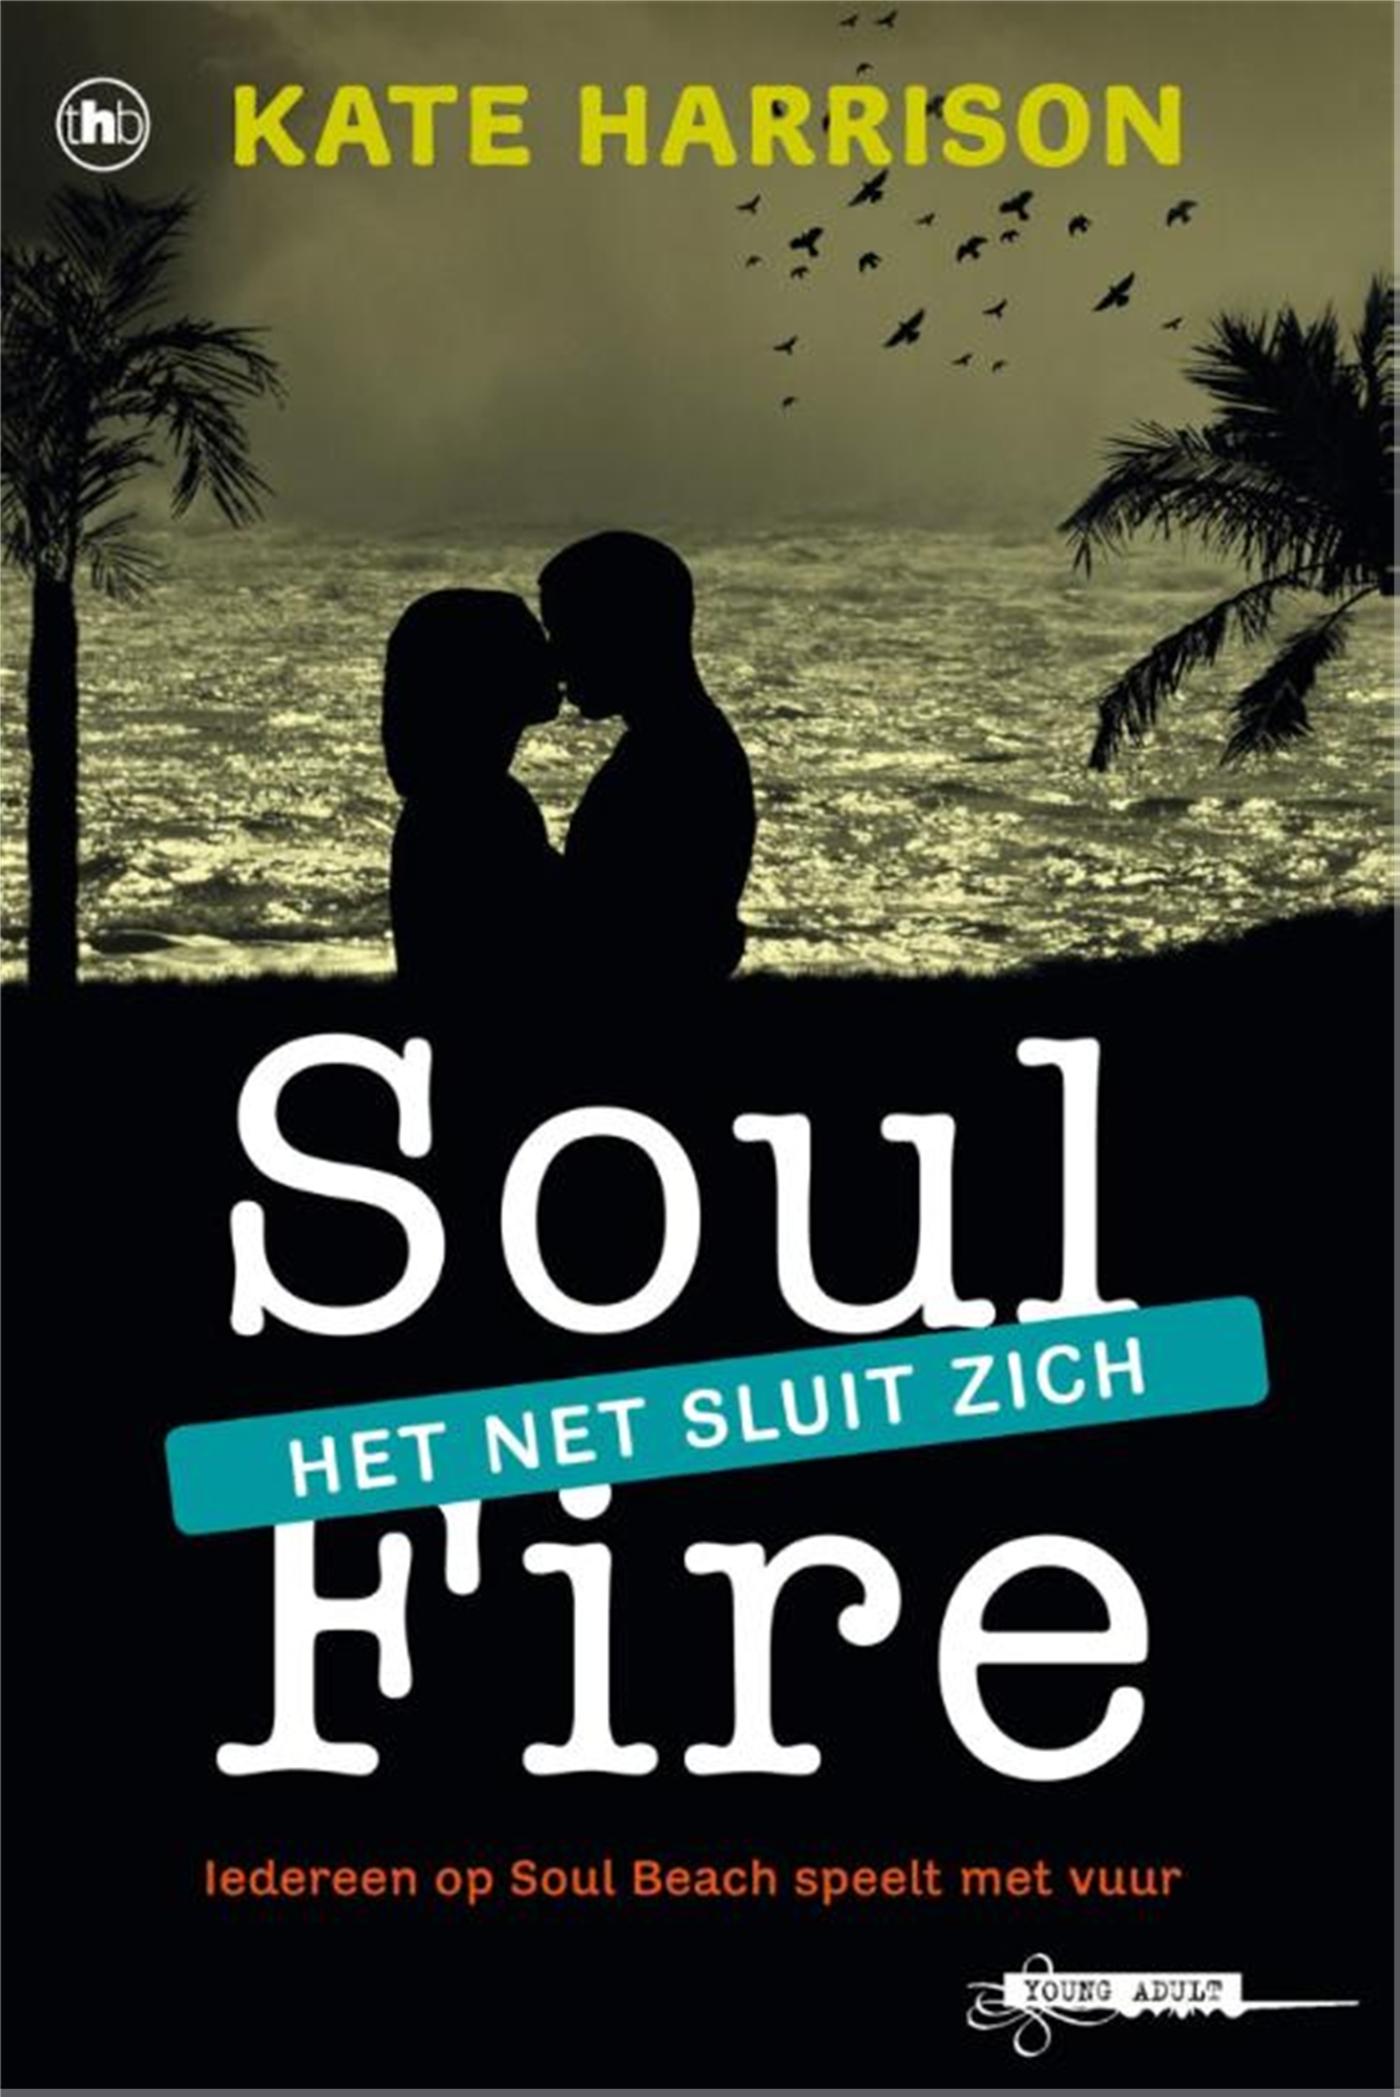 Soul fire (Ebook)